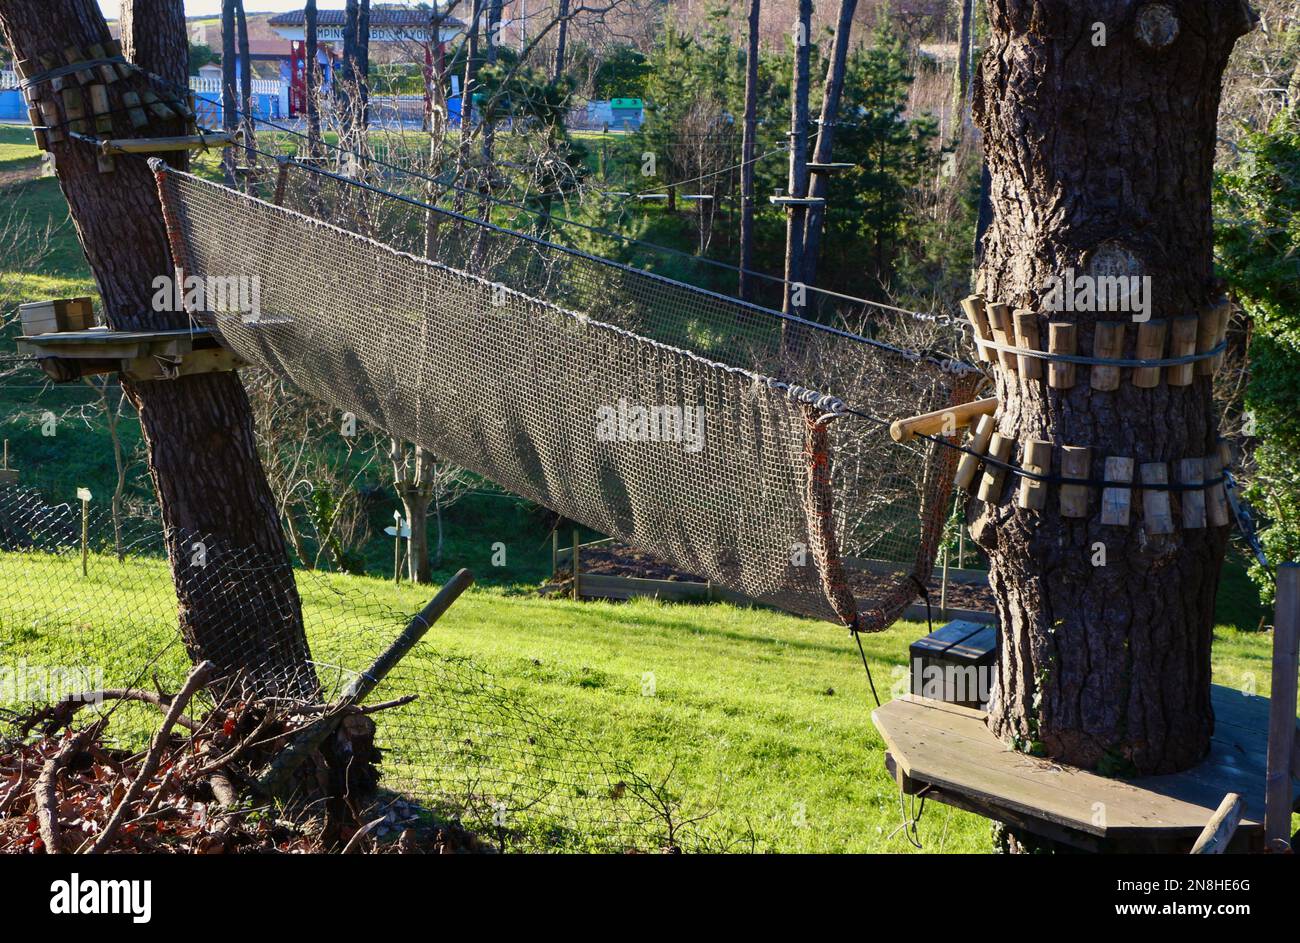 Park with zip wire course through trees Tirolinas Go! Santander Cantabria Spain Stock Photo